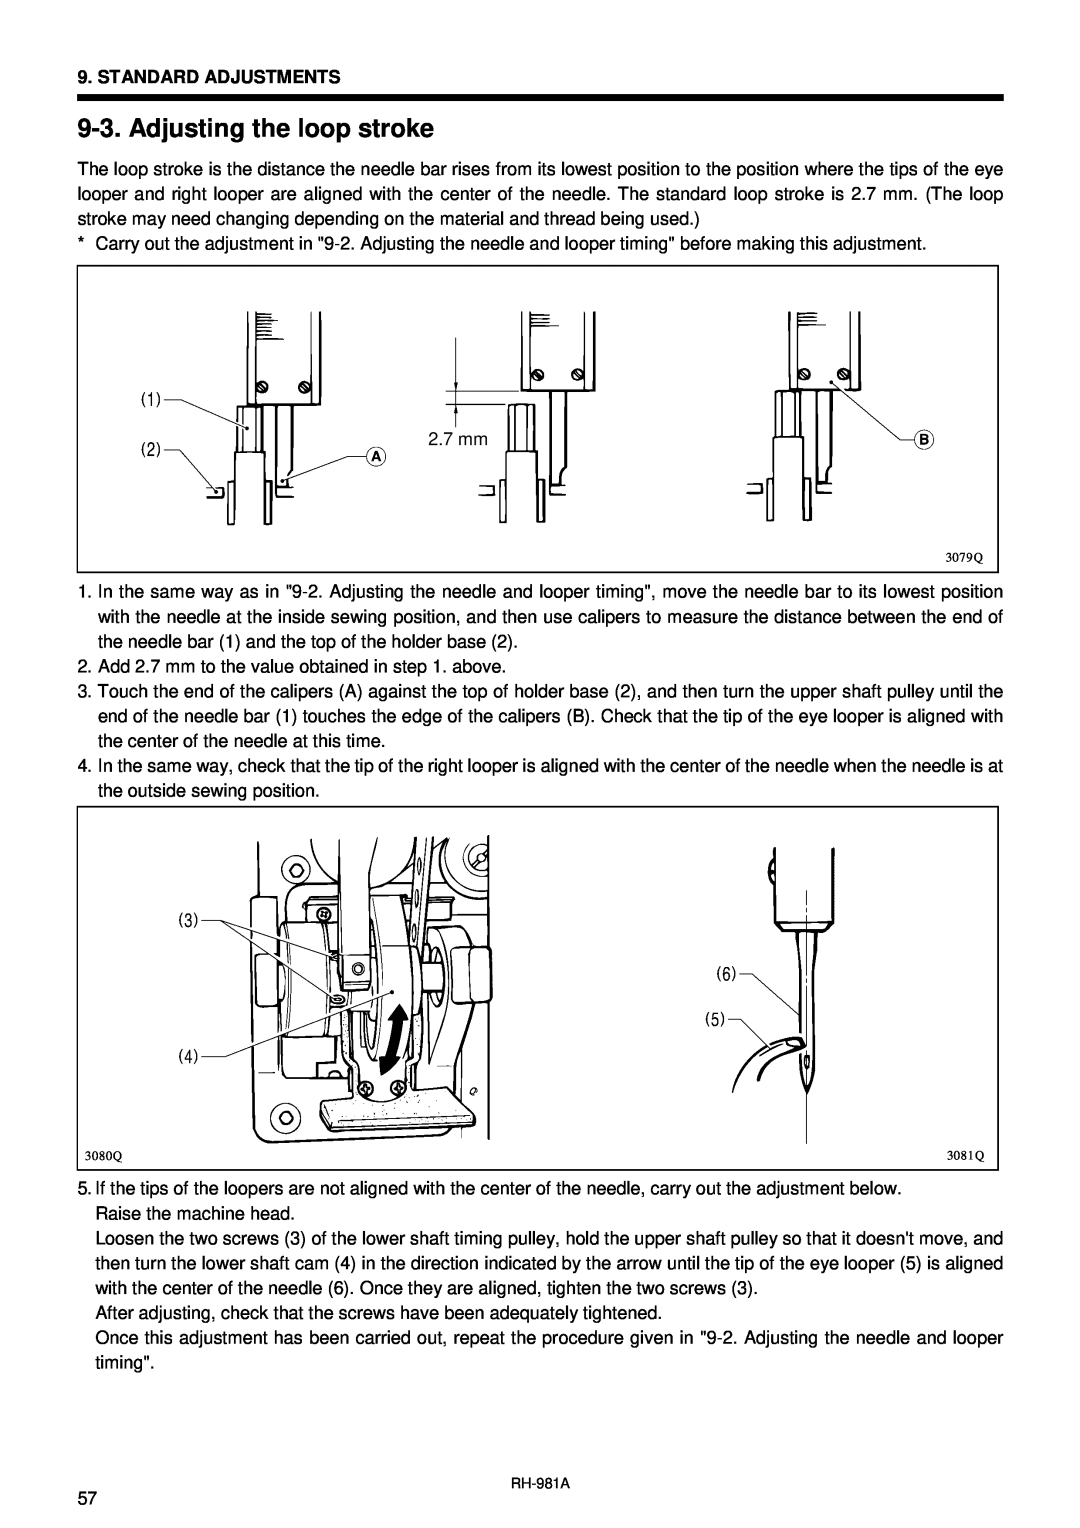 Brother rh-918a manual Adjusting the loop stroke 